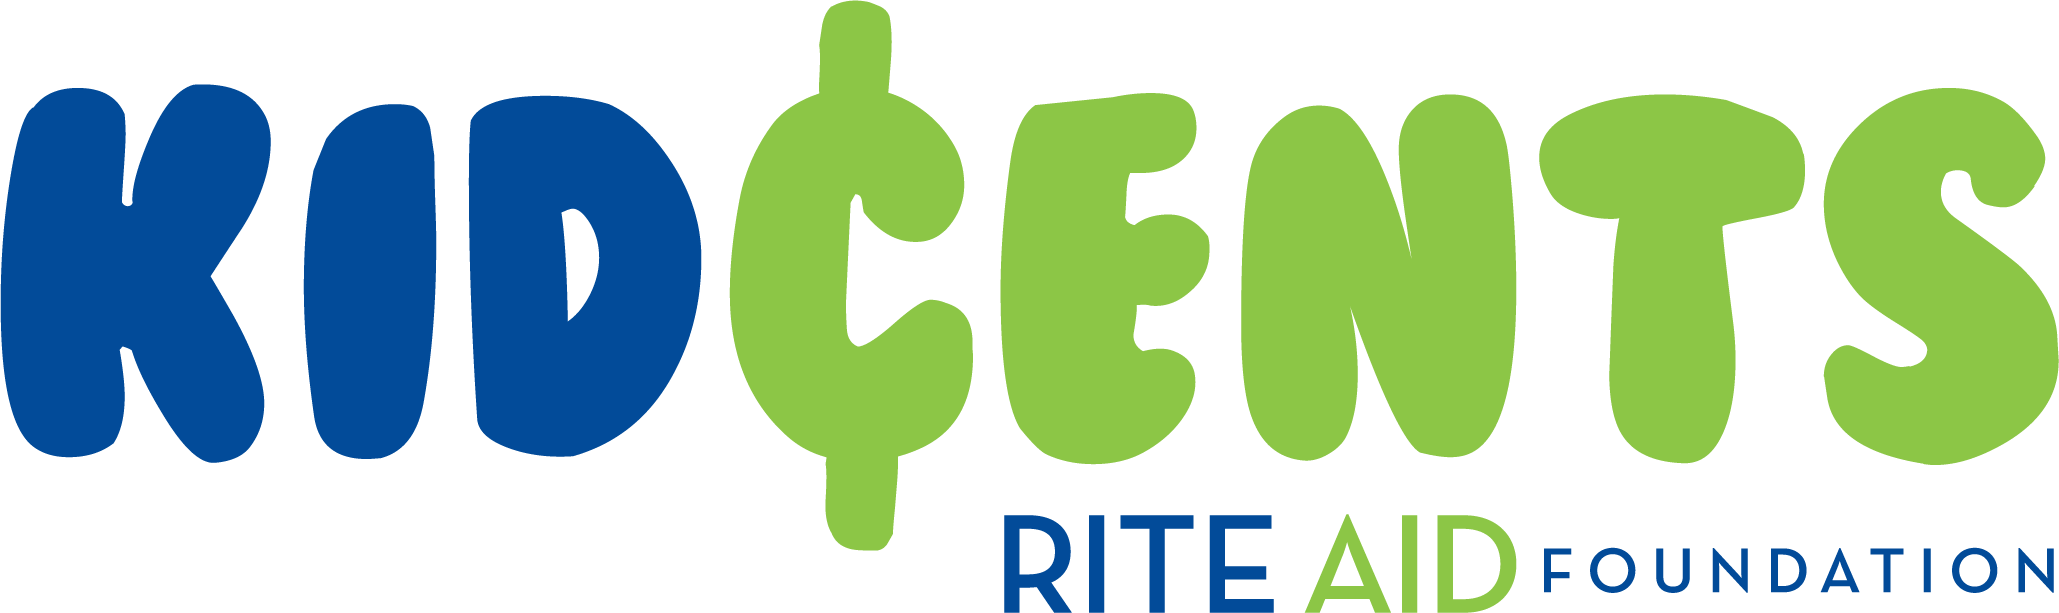 Rite Aid KidCents logo